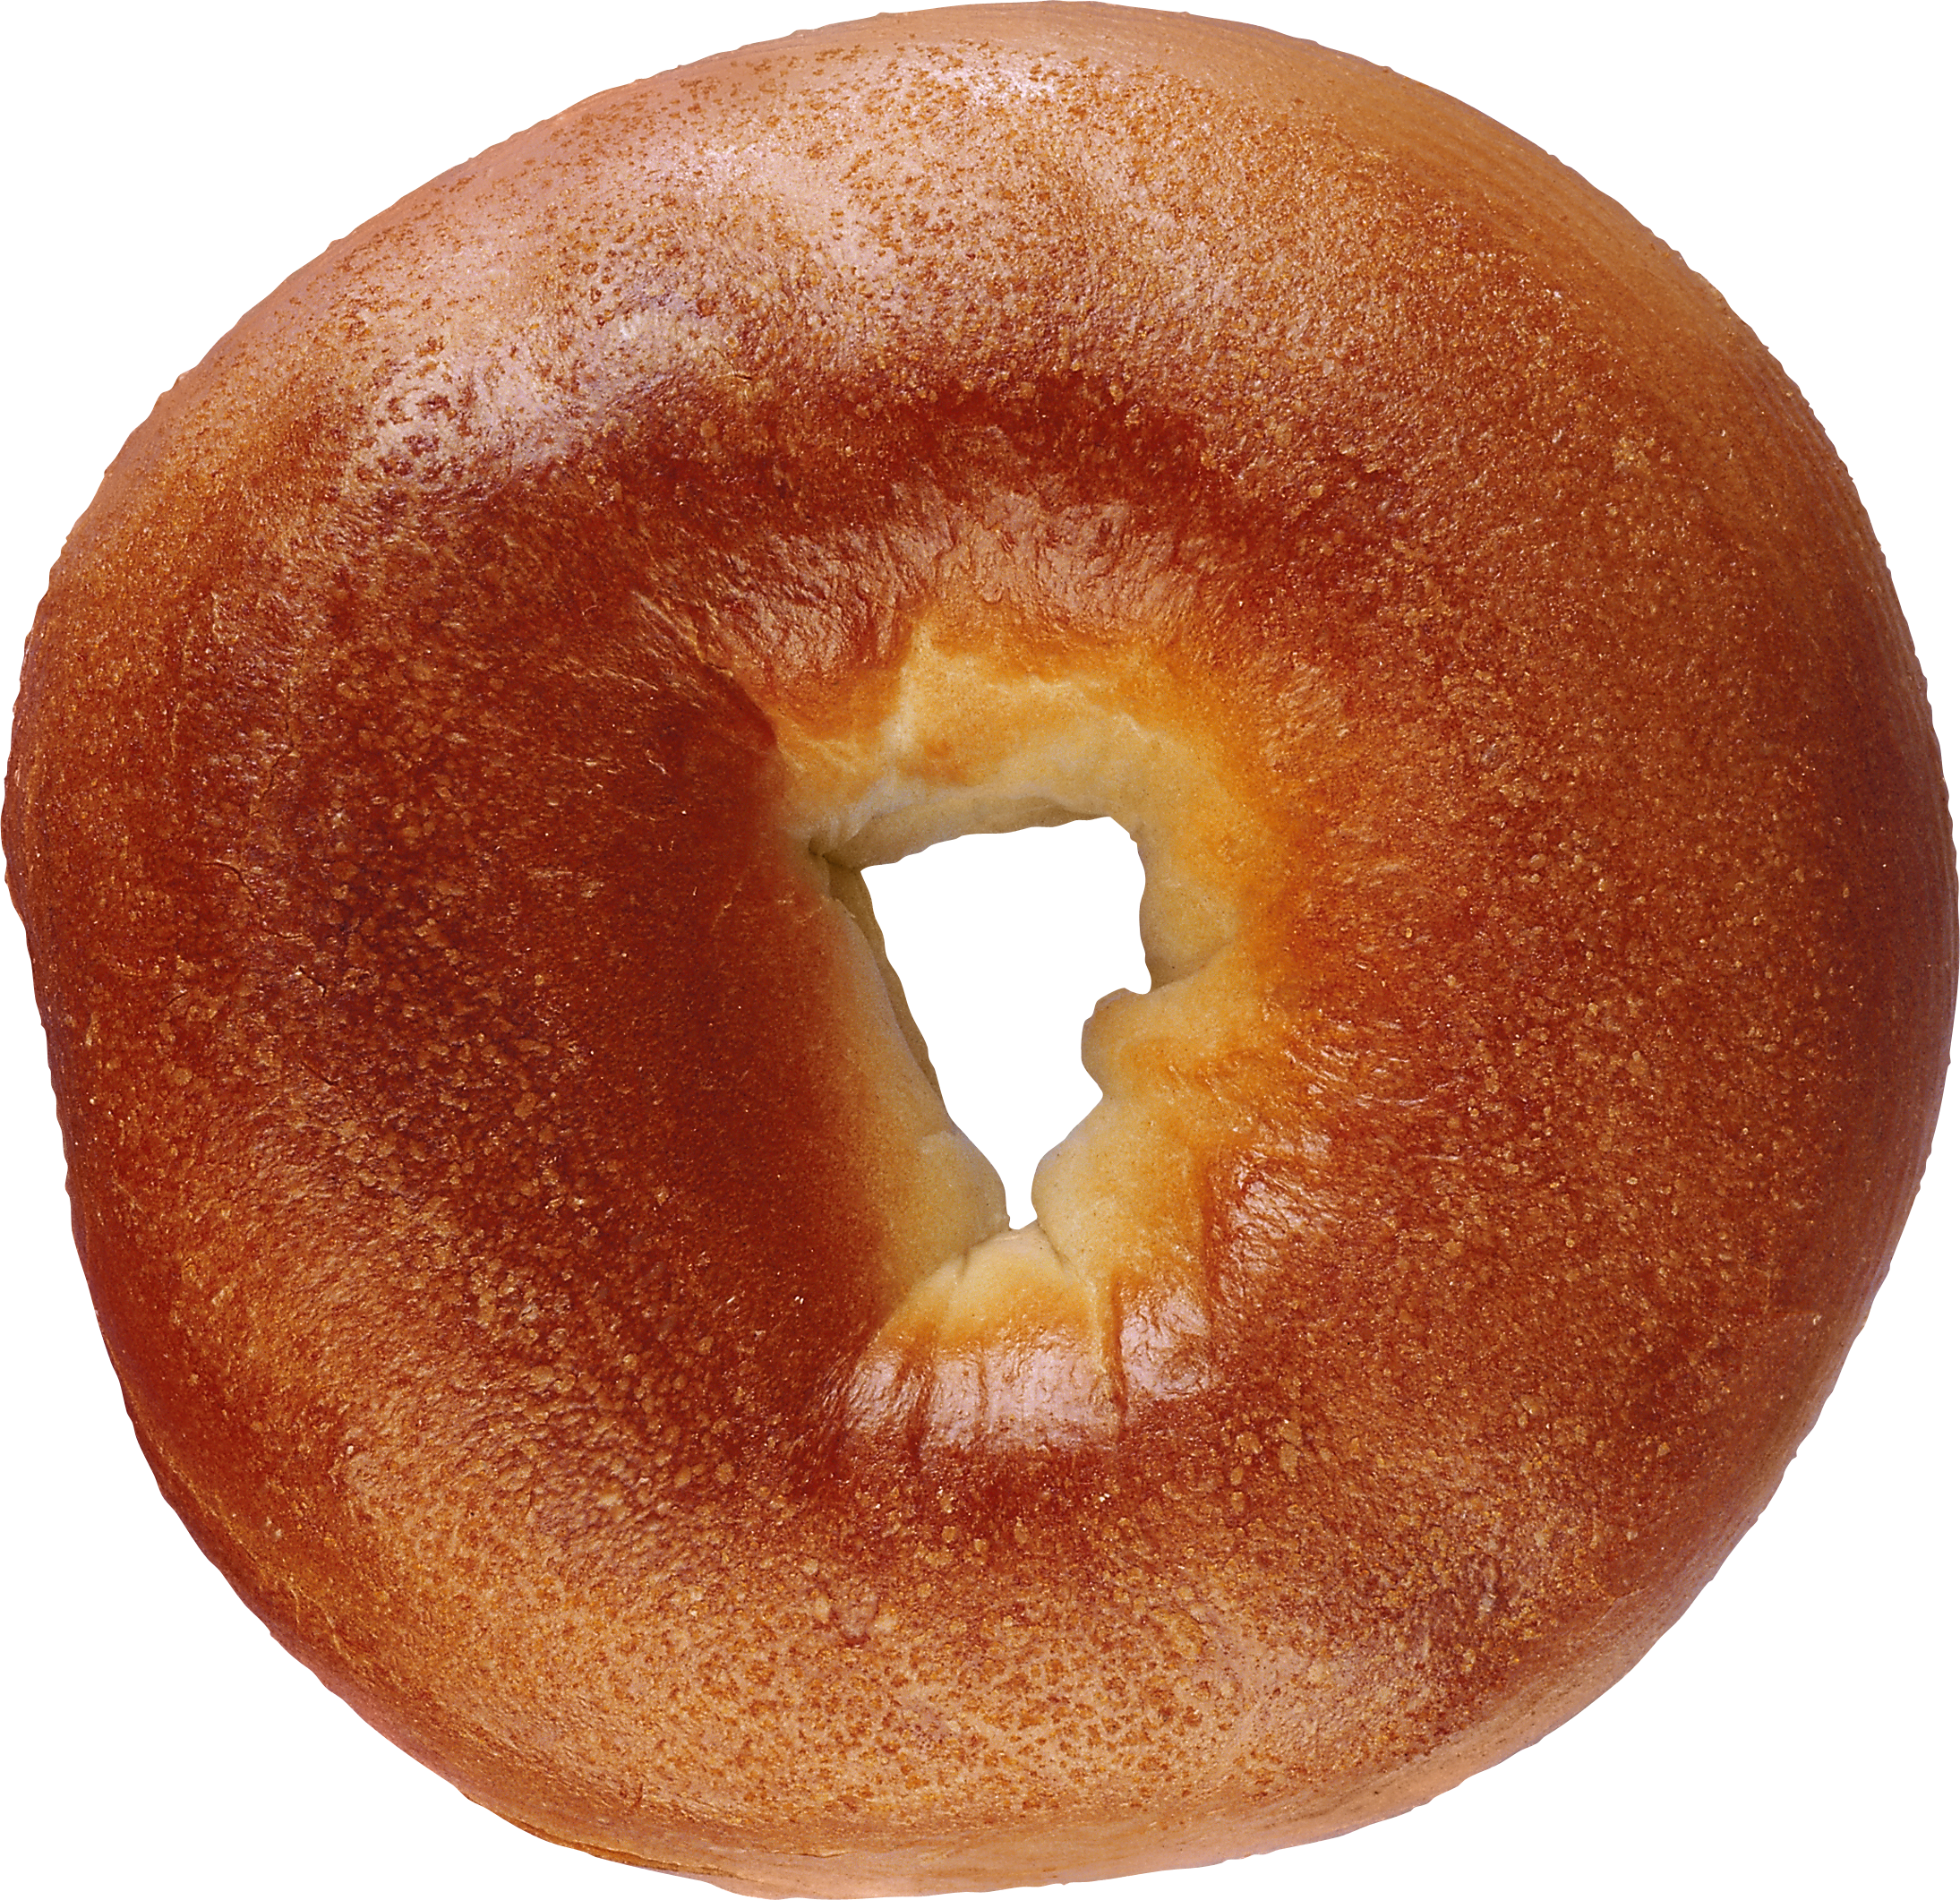 Donuts box doughnut